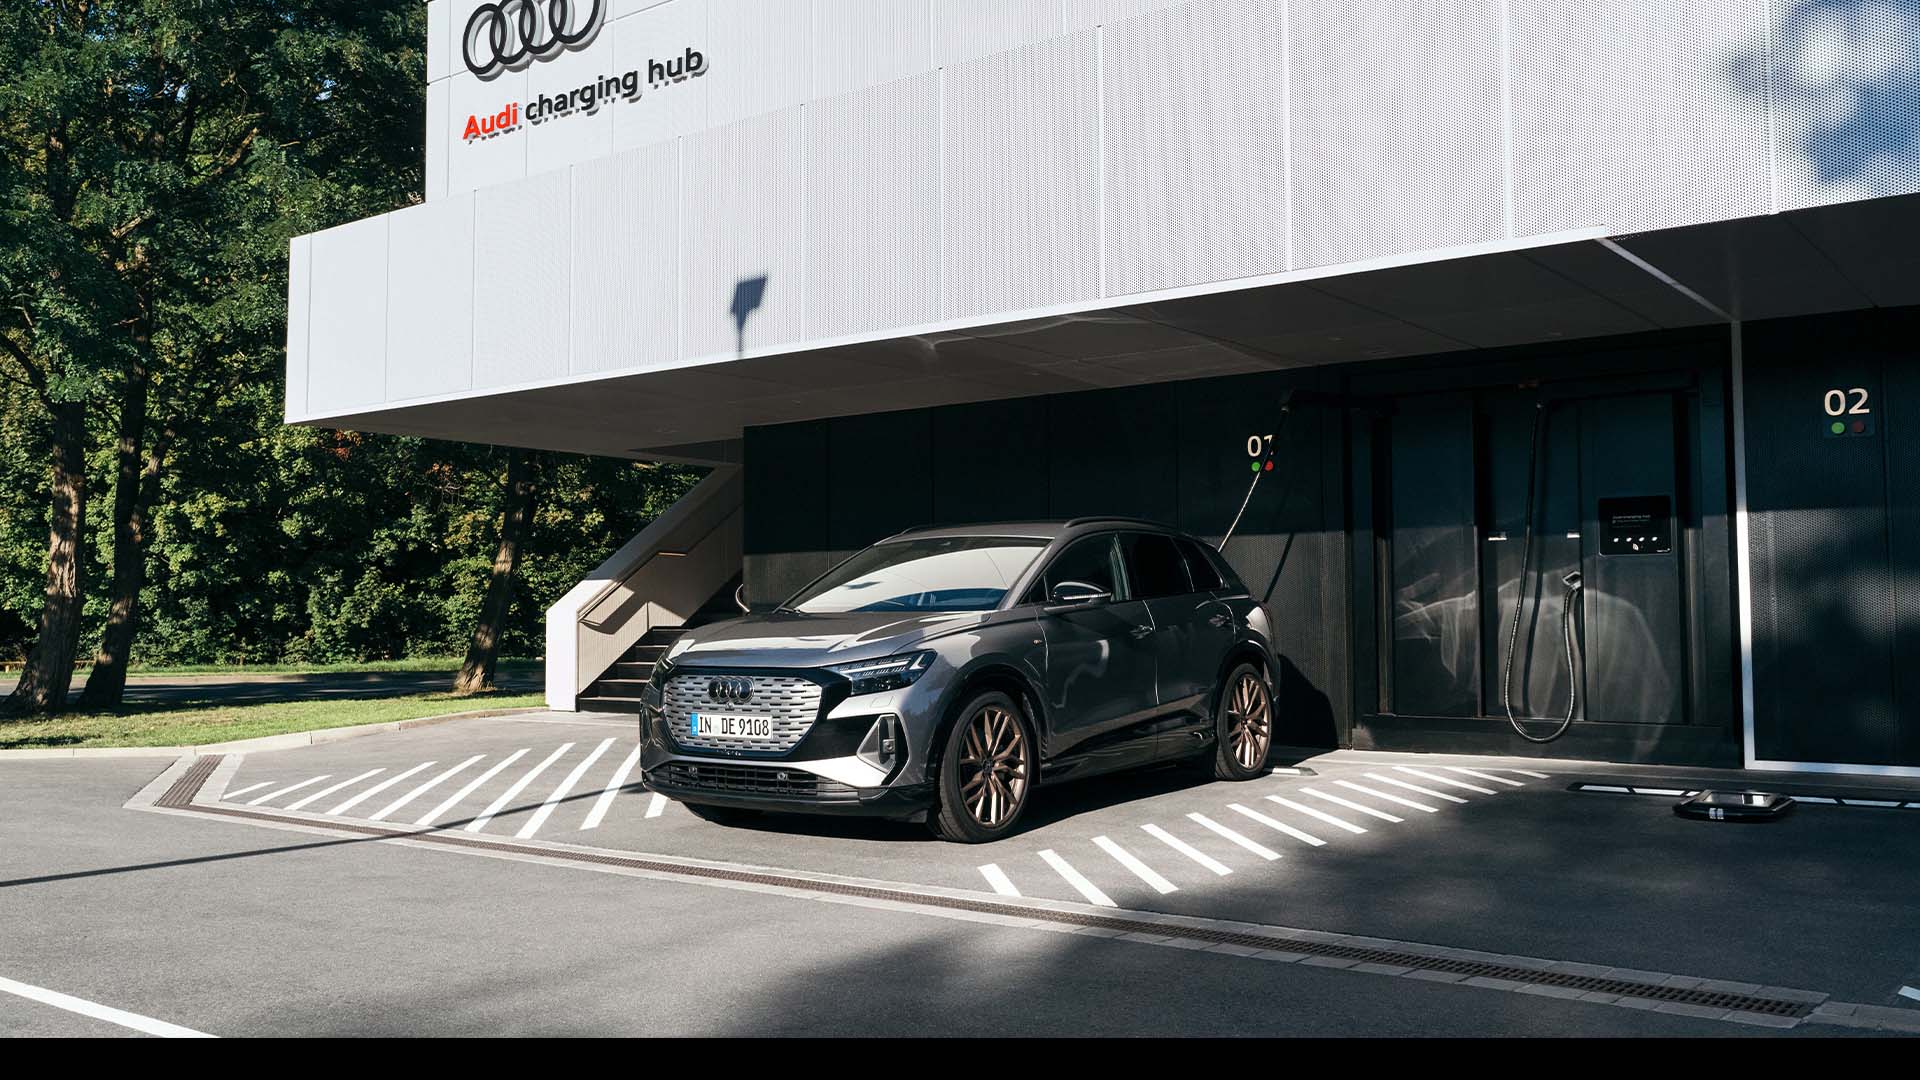 The Audi Q4 e-tron at the Audi charging hub in Nuremberg.